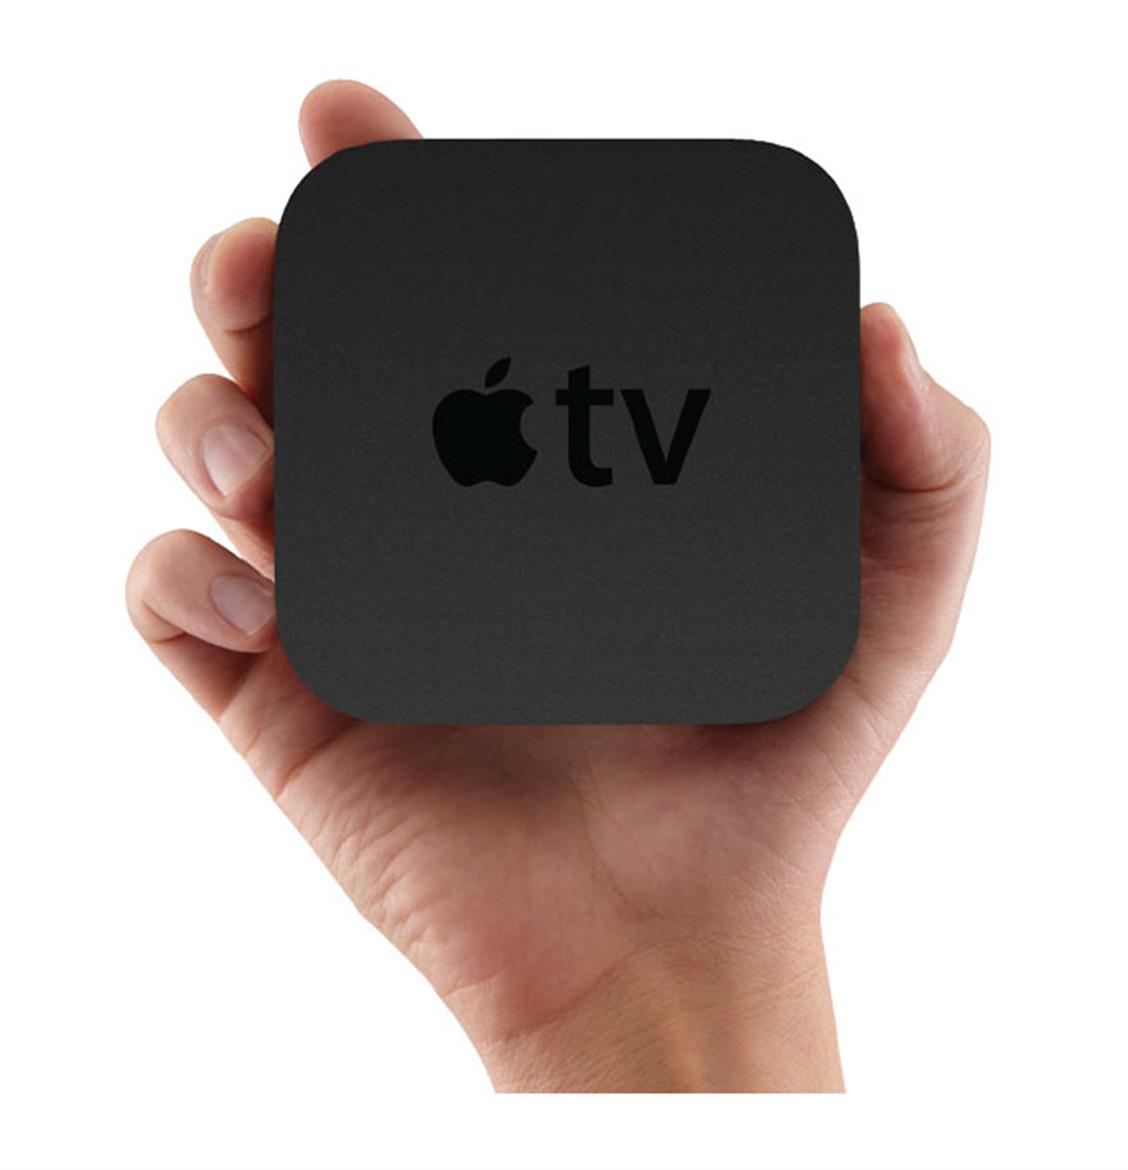 Apple TV Wireless HD Media Streamer Review